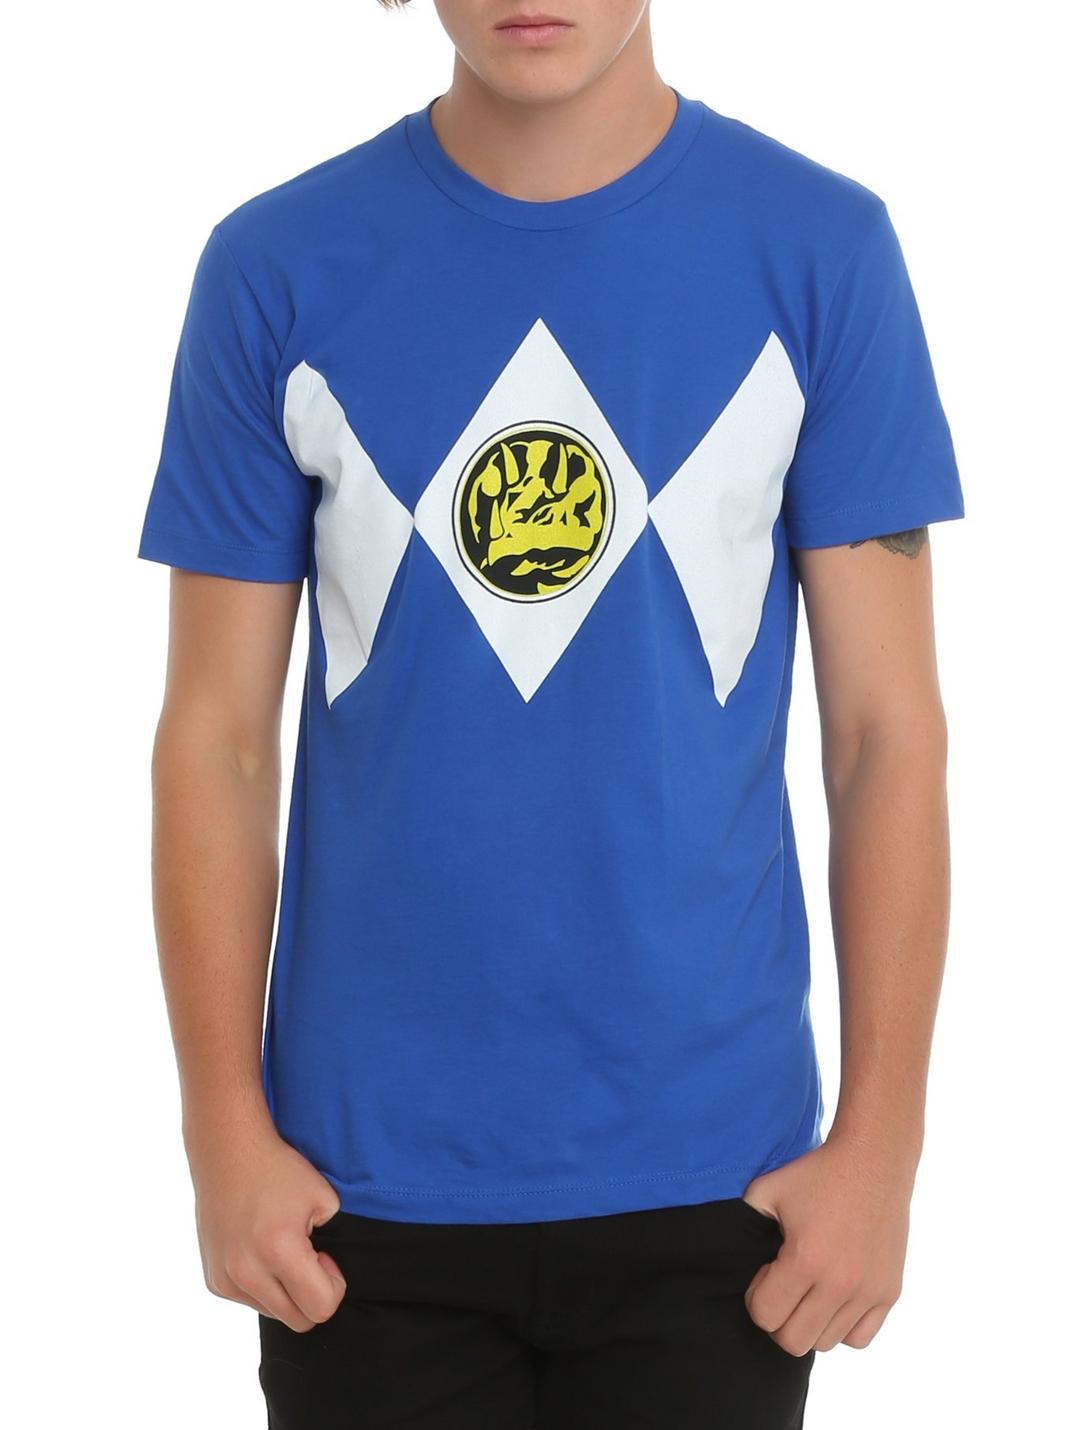 Mighty Morphin Power Rangers Blue Ranger Cosplay T-Shirt, ROYAL BLUE, hi-res